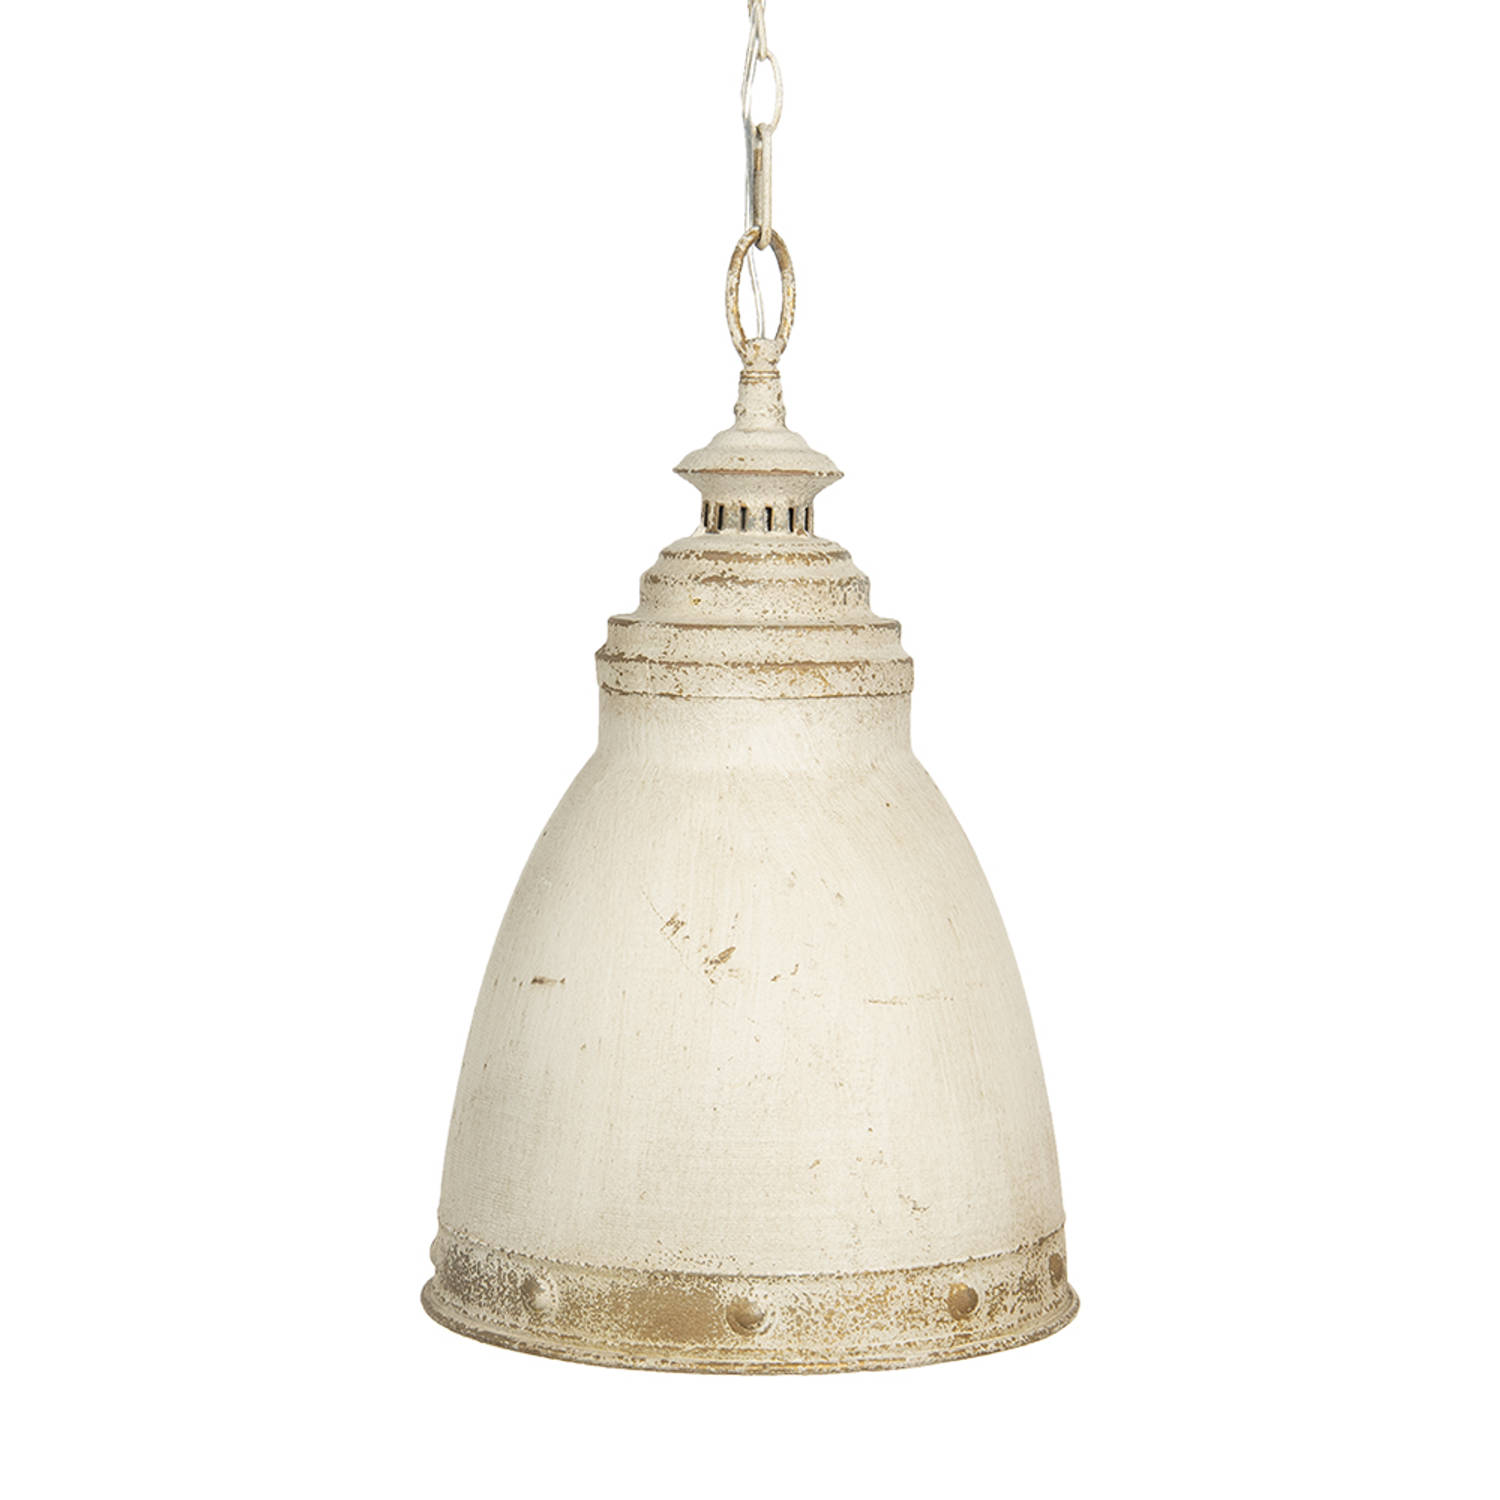 HAES DECO Hanglamp Shabby Chic Vintage-Retro Lamp, Ø 28x45 cm Ronde Hanglamp Eettafel, Hanglamp Eetk